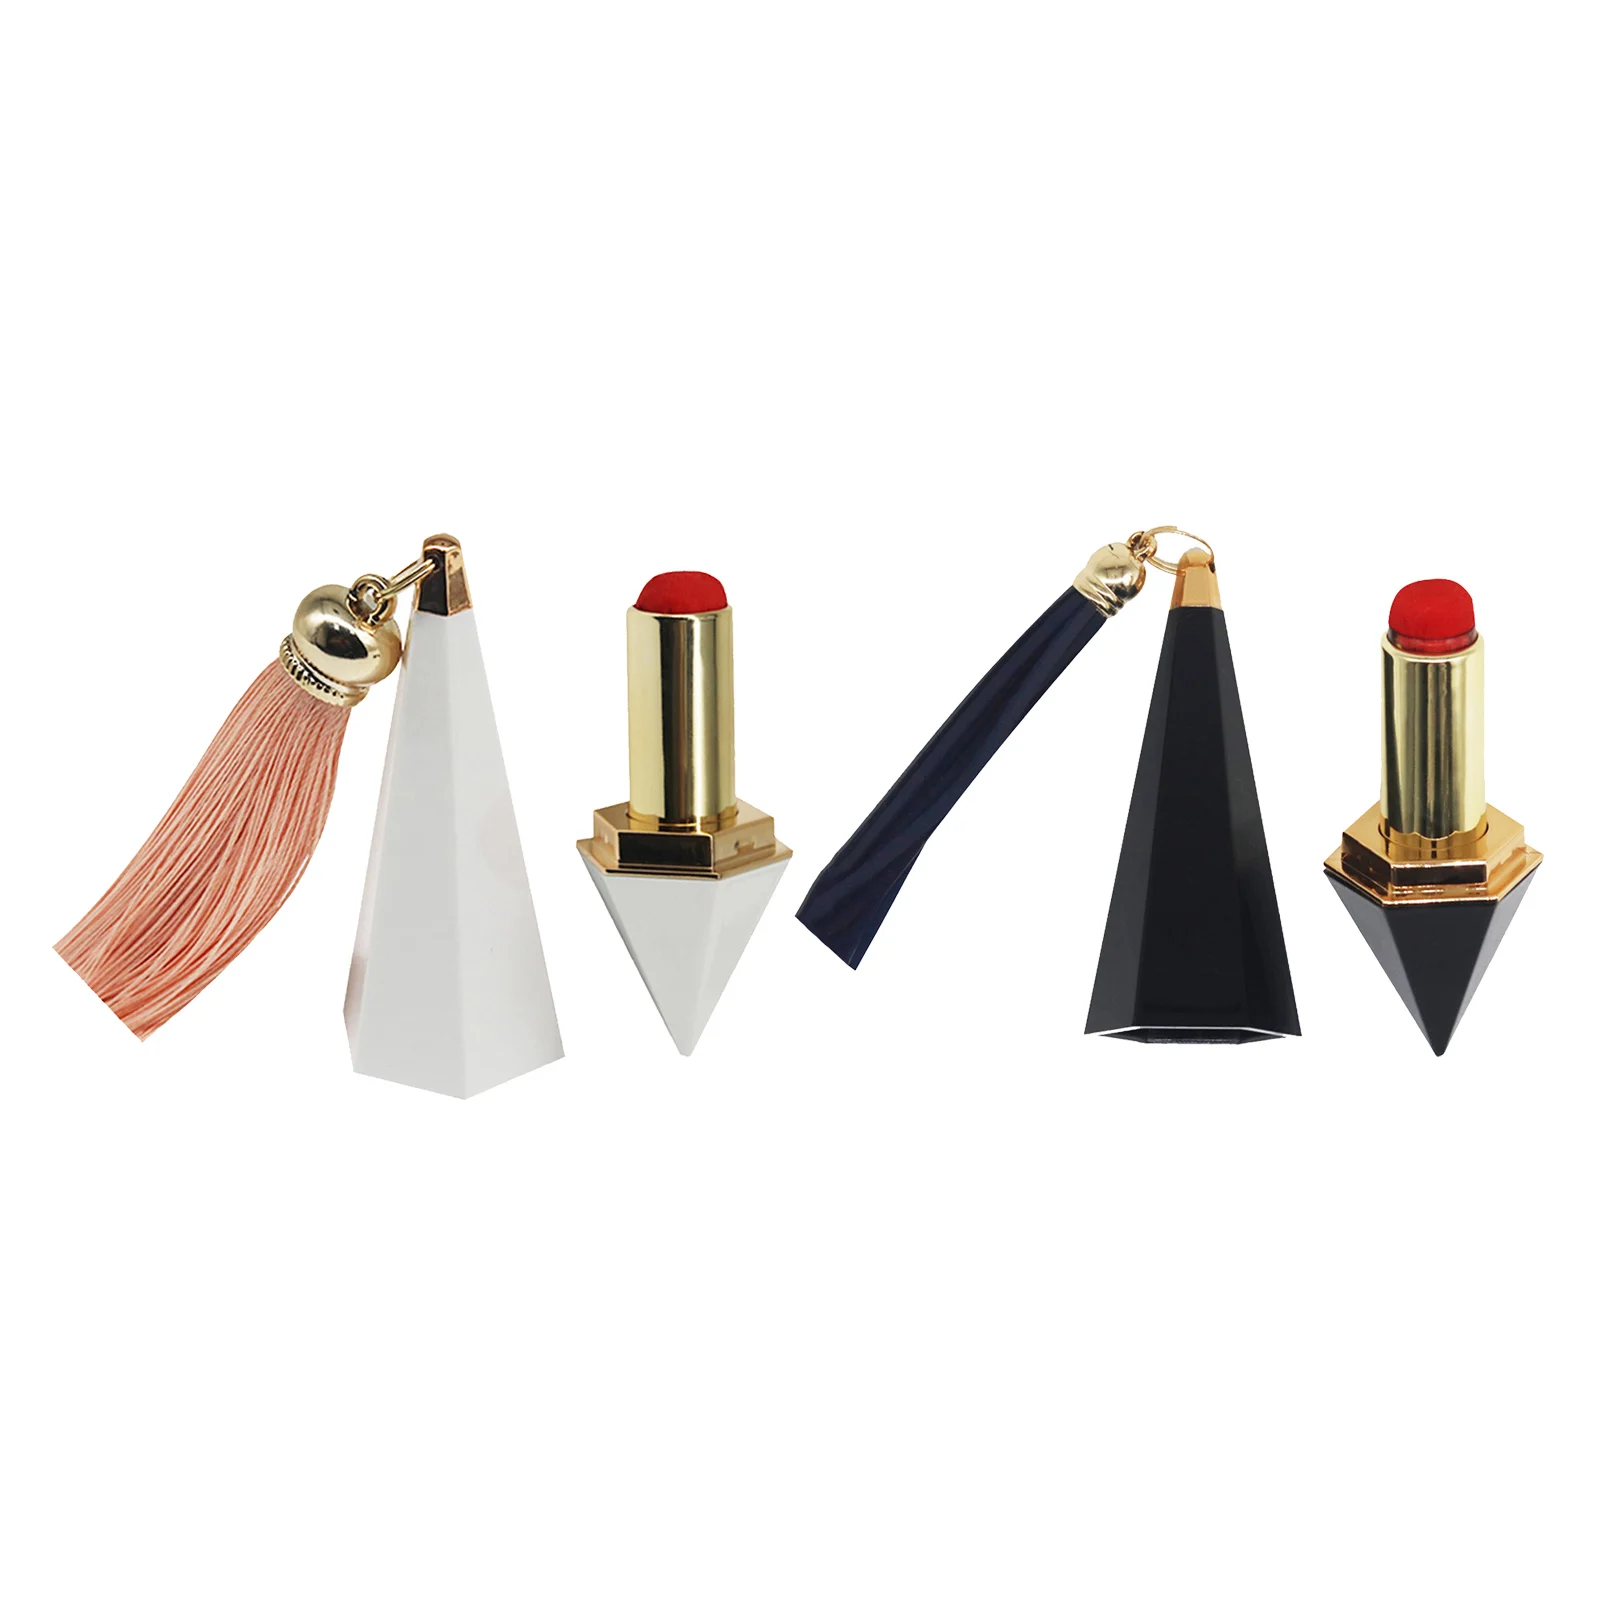 Retractable Pincushion Decorative Lipstick Shaped Needlework Pin Cushion Holder Needles Case Storage Tube Carrier with Tassel